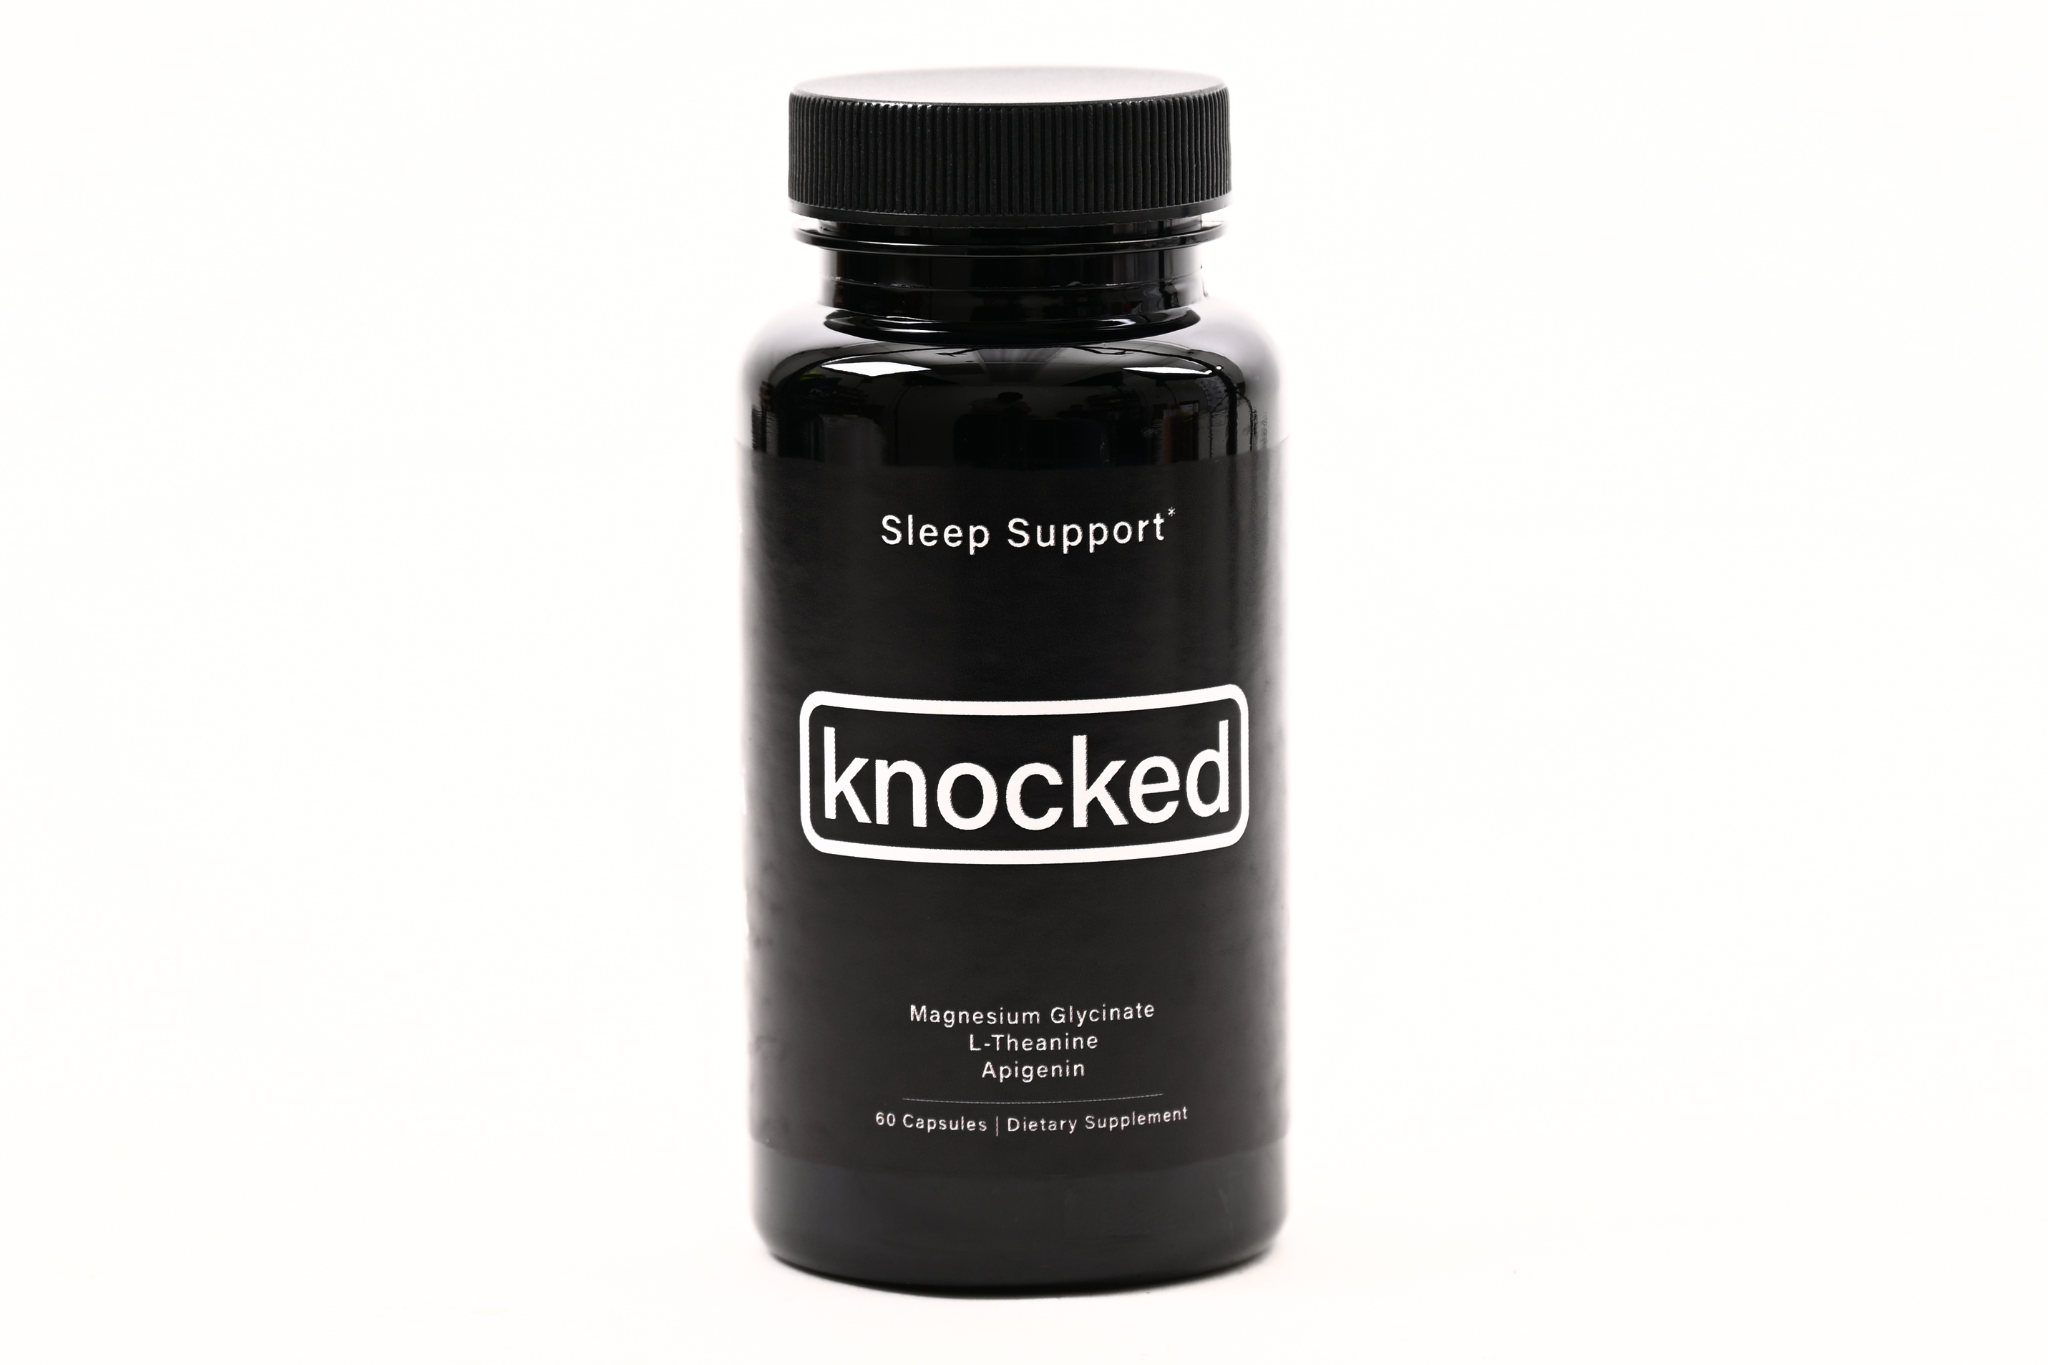 Knocked Sleep Support Supplement